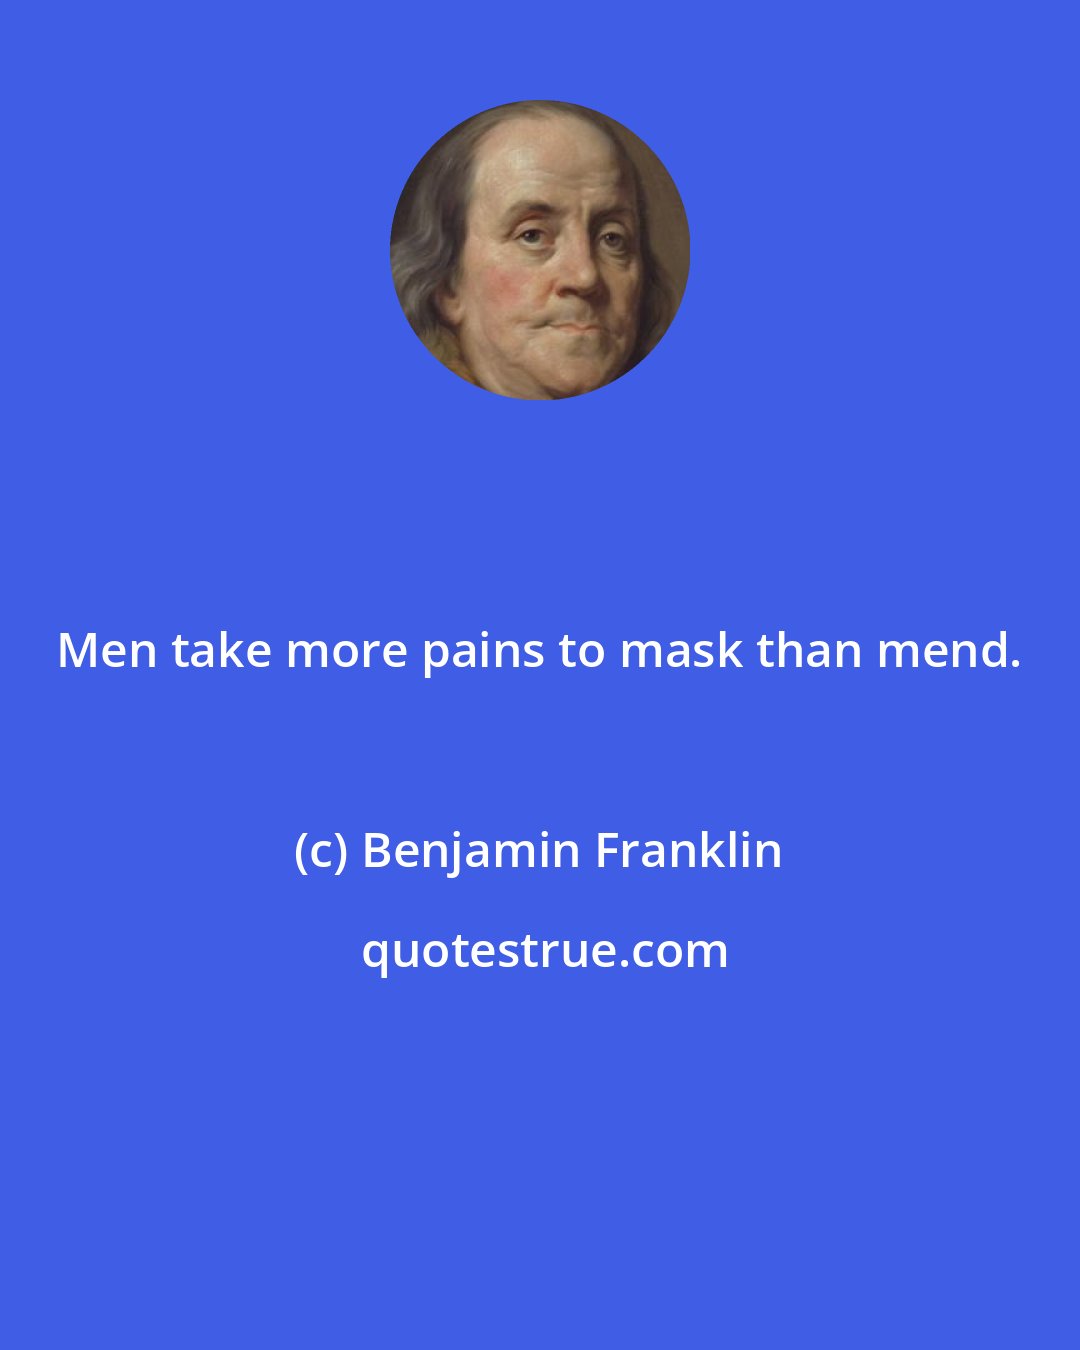 Benjamin Franklin: Men take more pains to mask than mend.